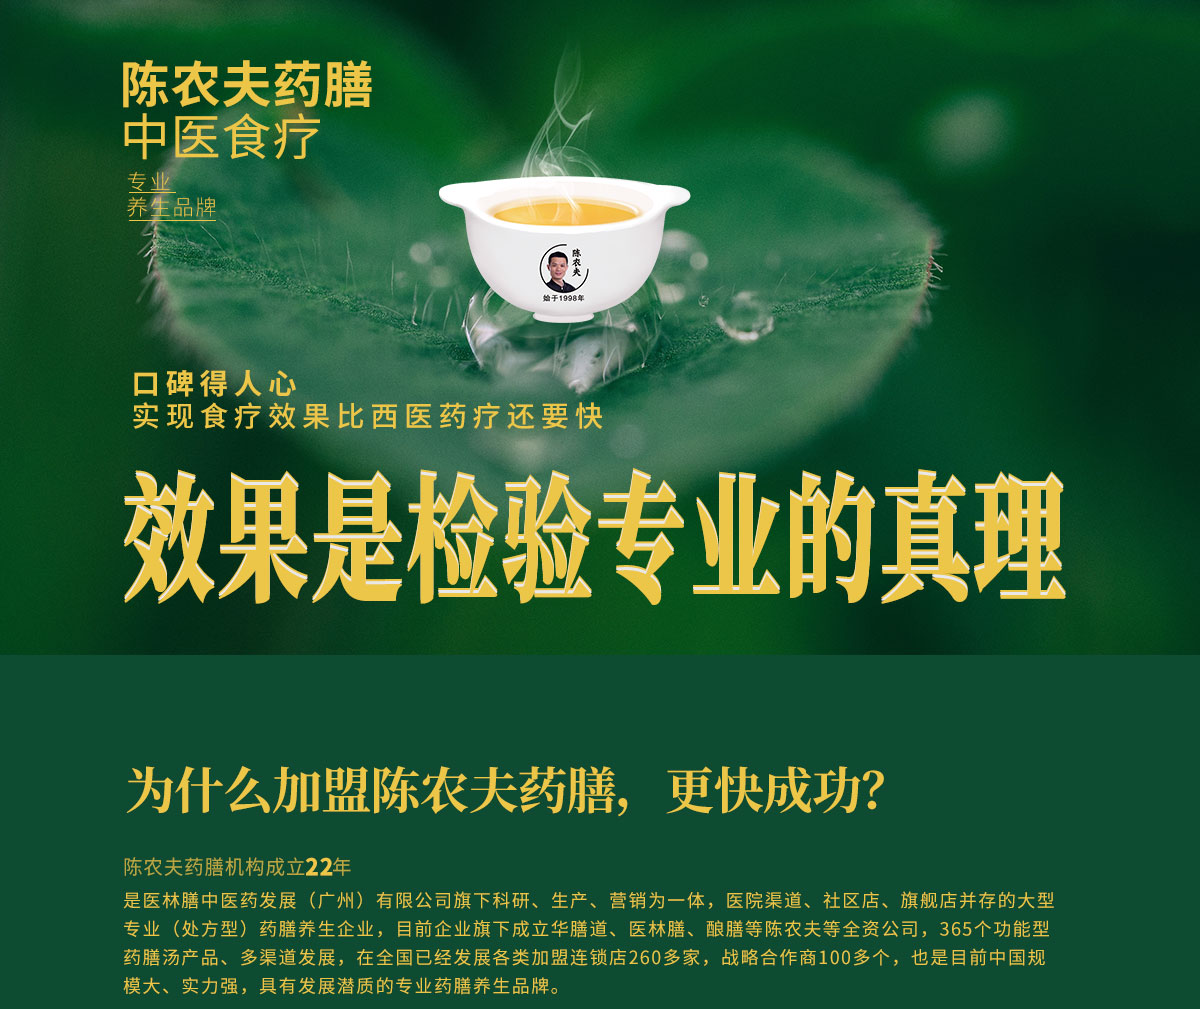  China Merchants website design (2020) 10_ 01.jpg